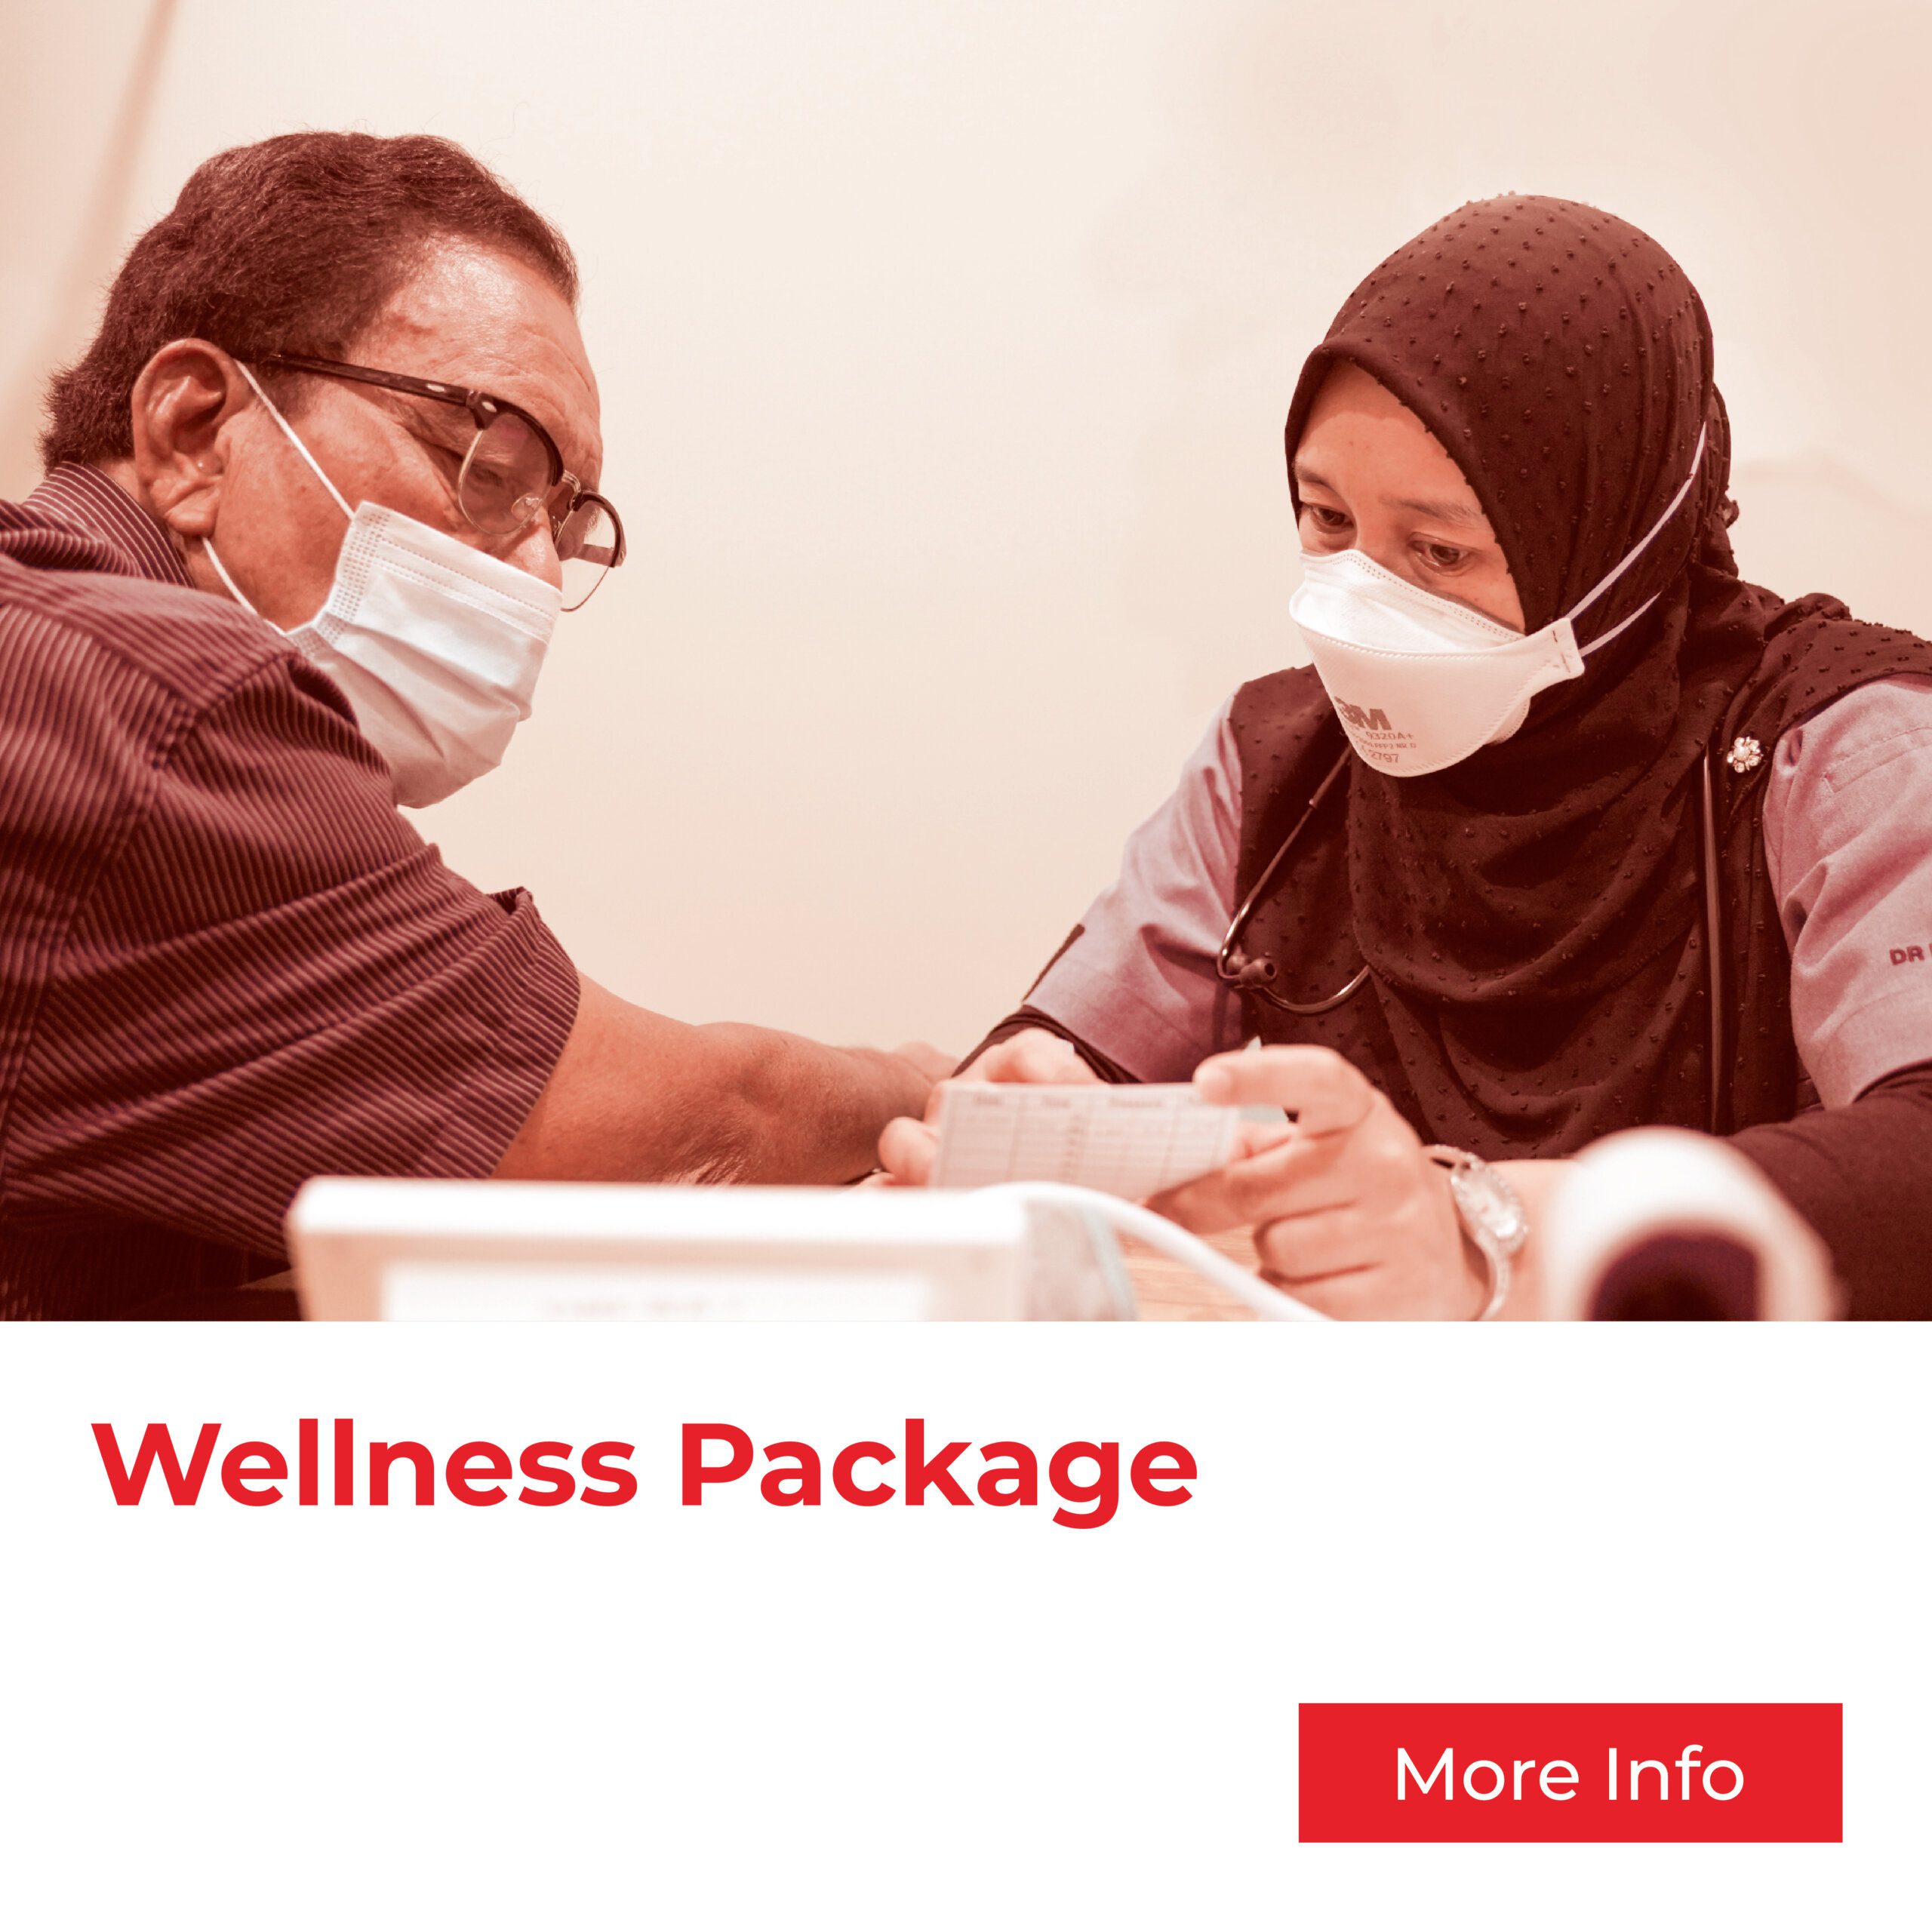 Wellness Package & Medical Check Up by Klinik As Salam